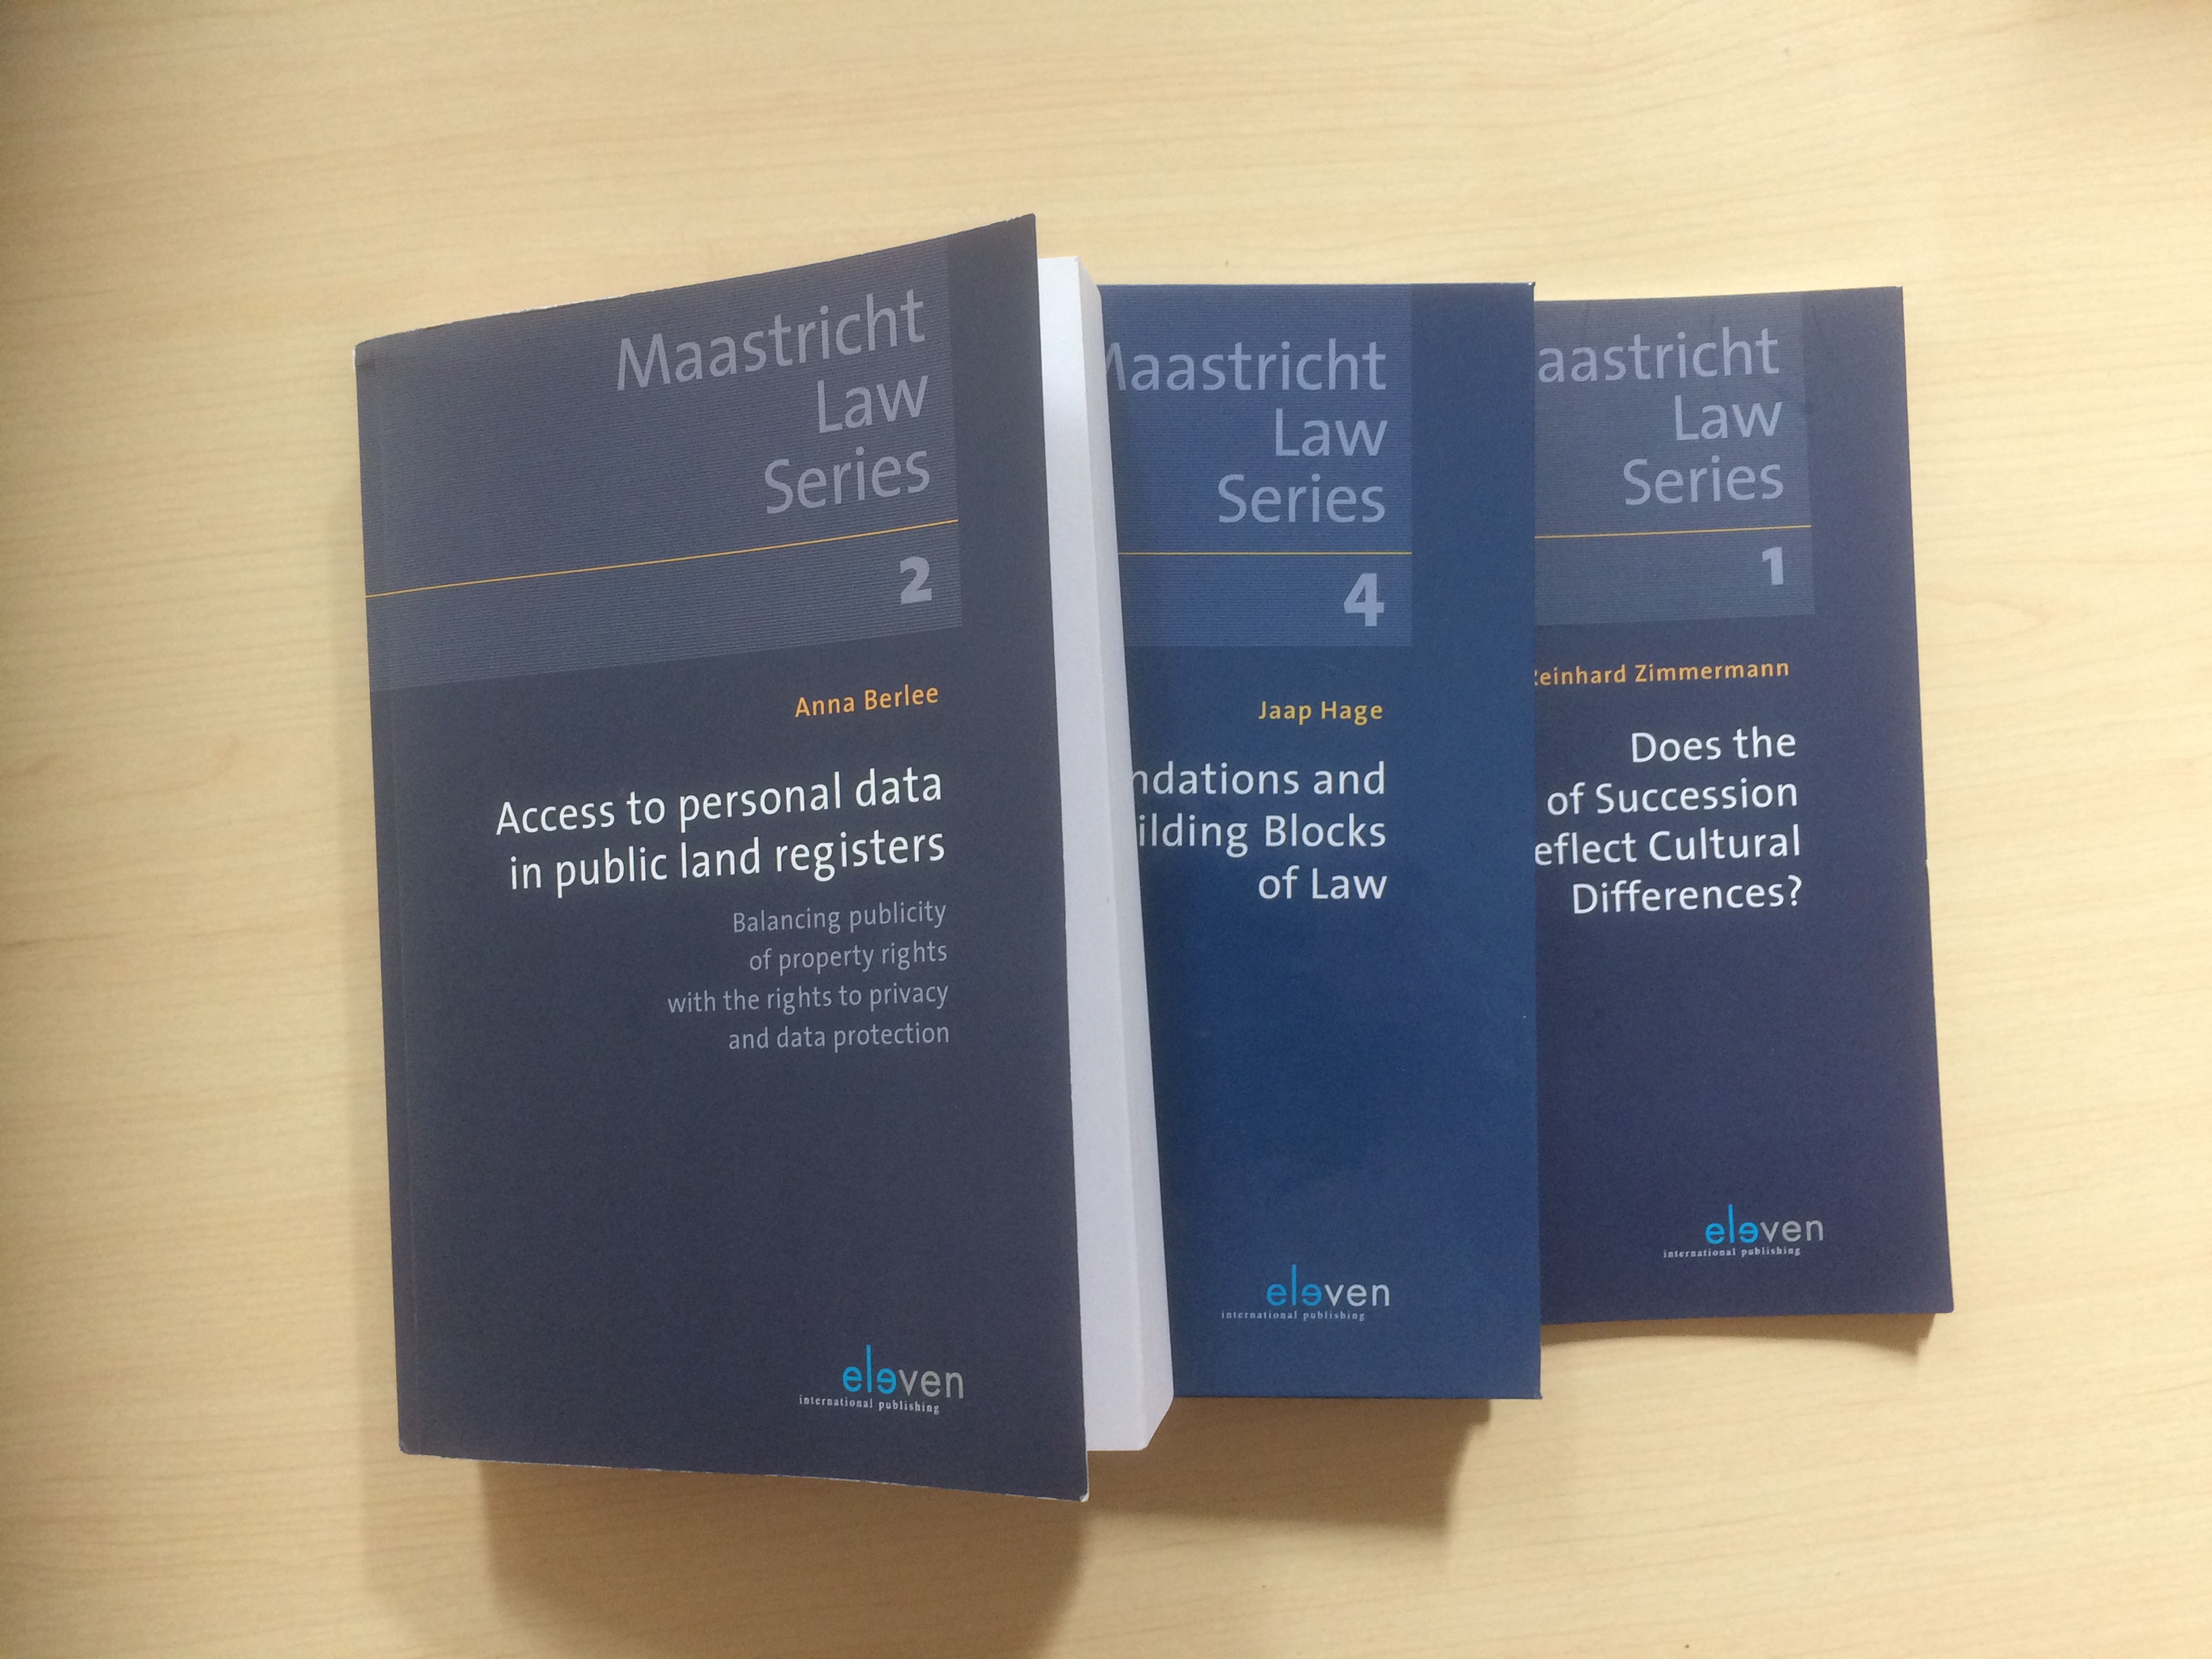 Maastricht Law book Series 4,2,1